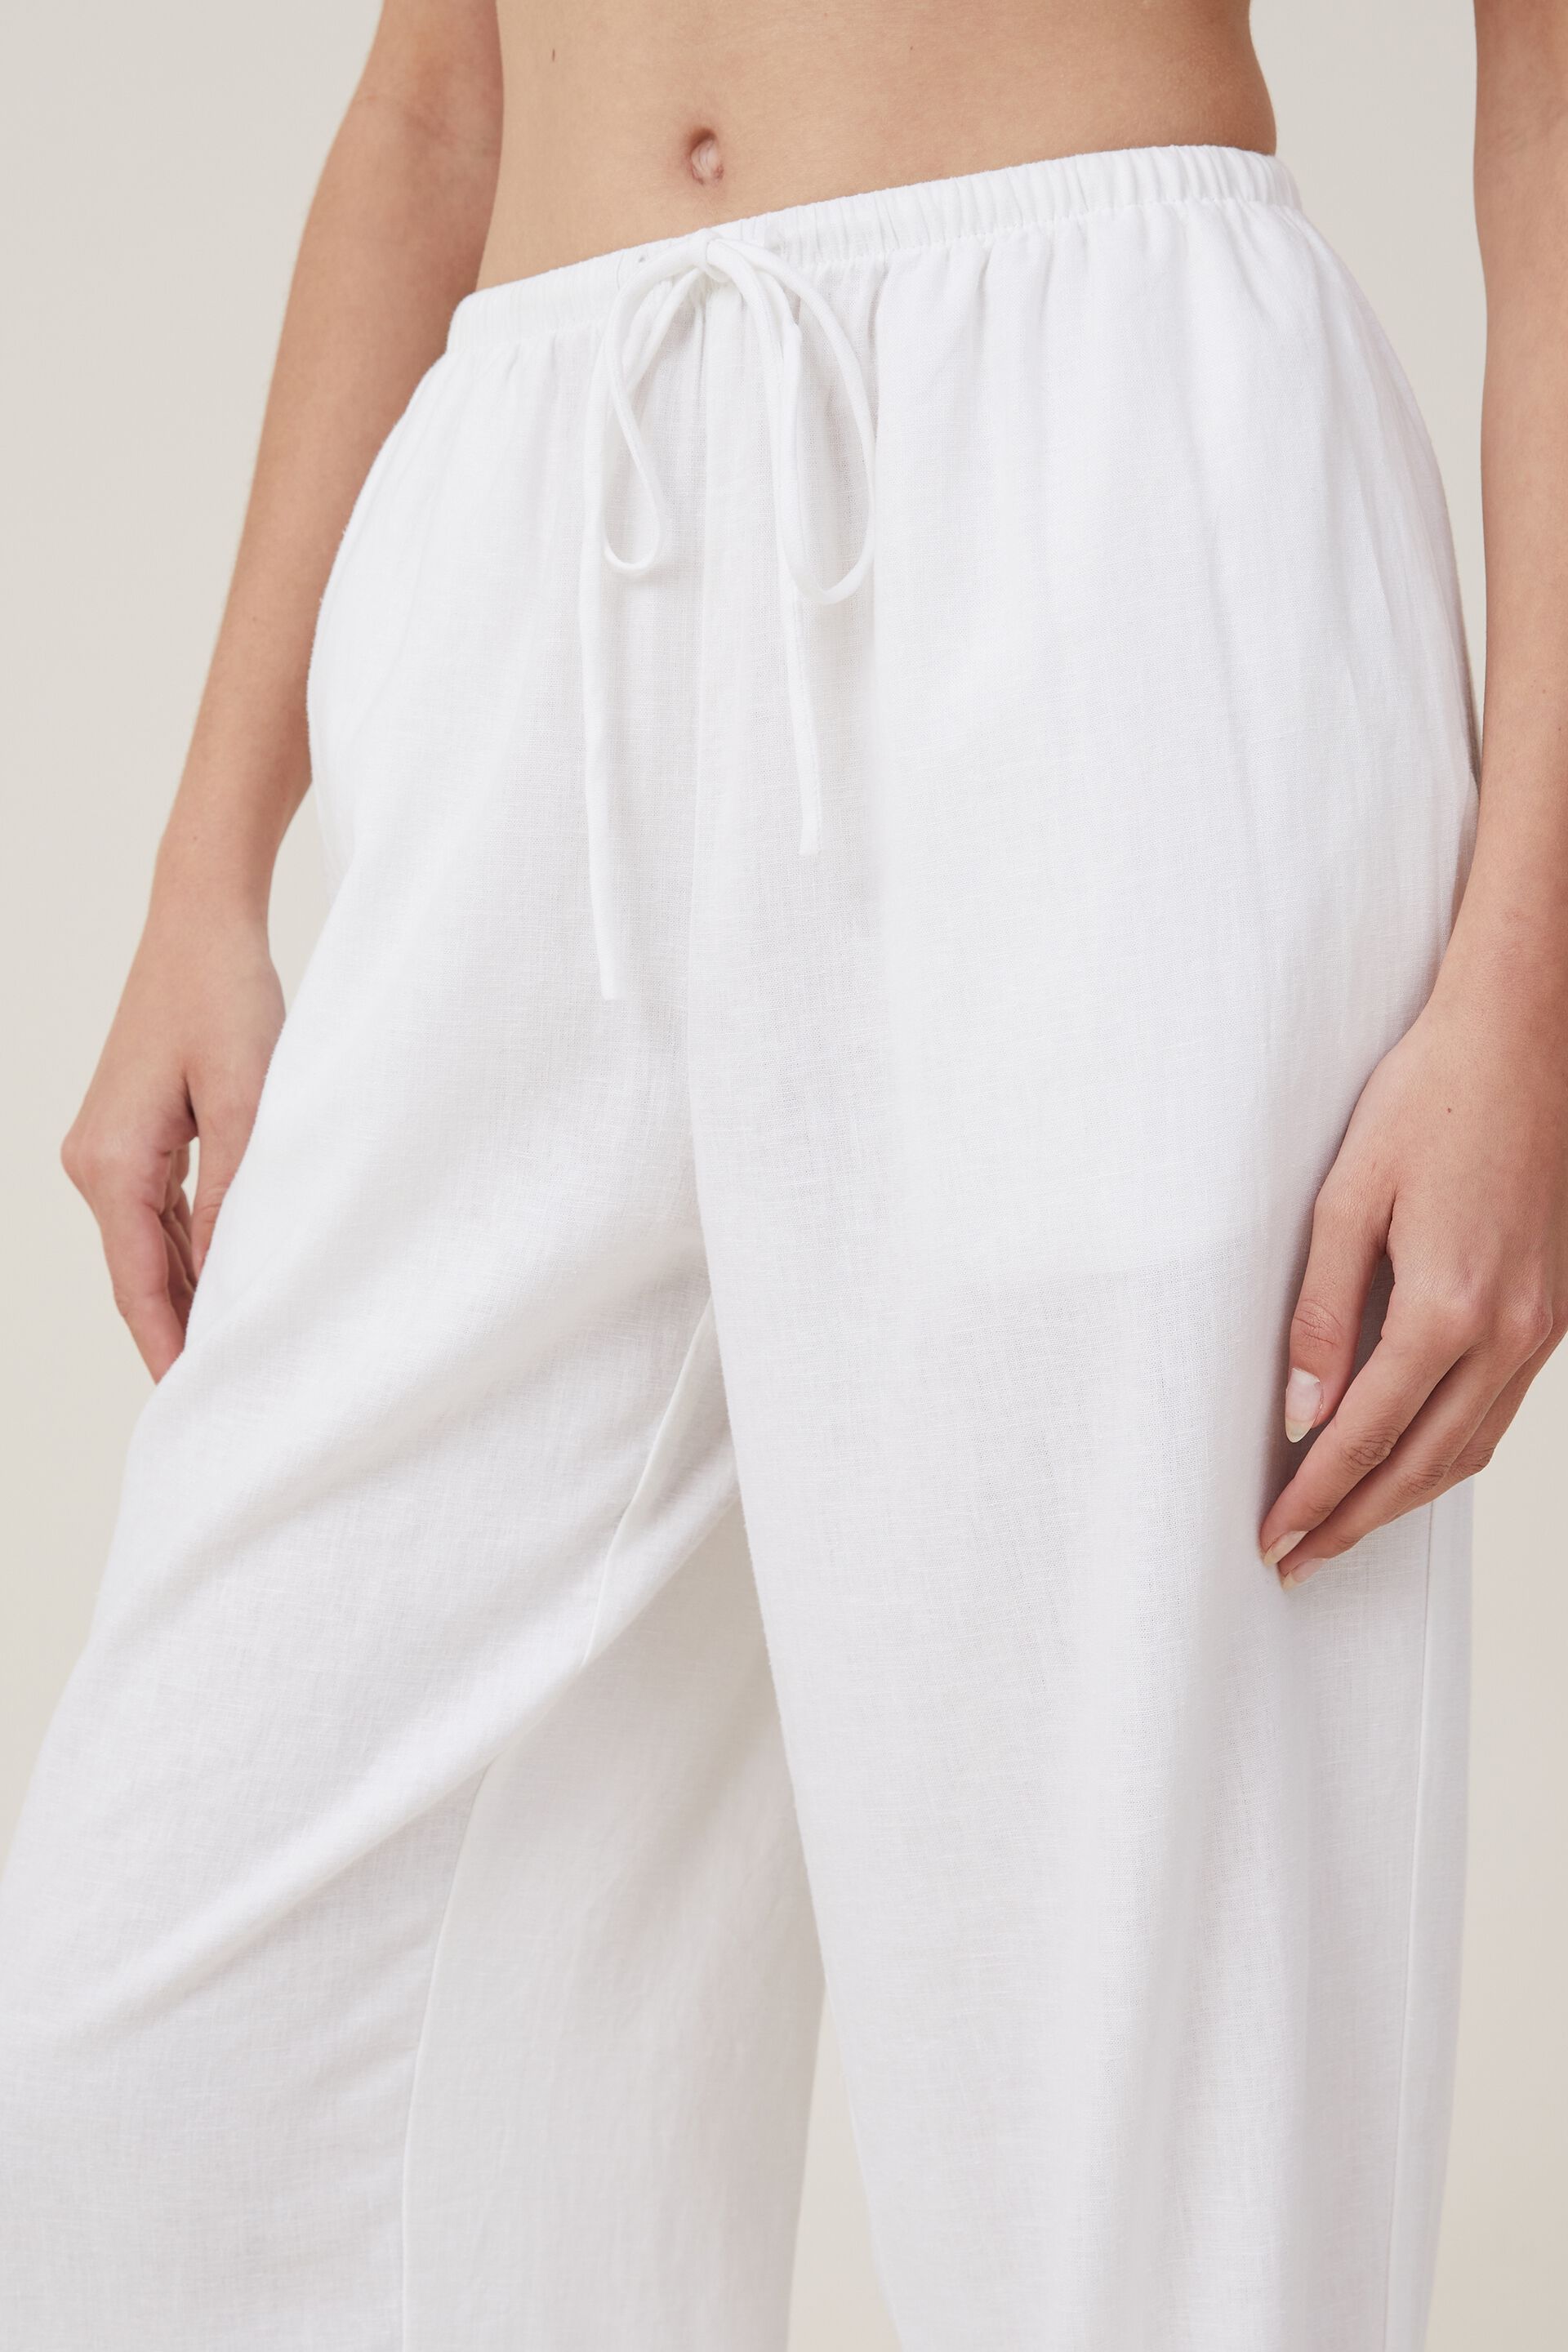 Buy Beige Cotton Flax Regular Pants (Pants) for INR599.00 | Biba India